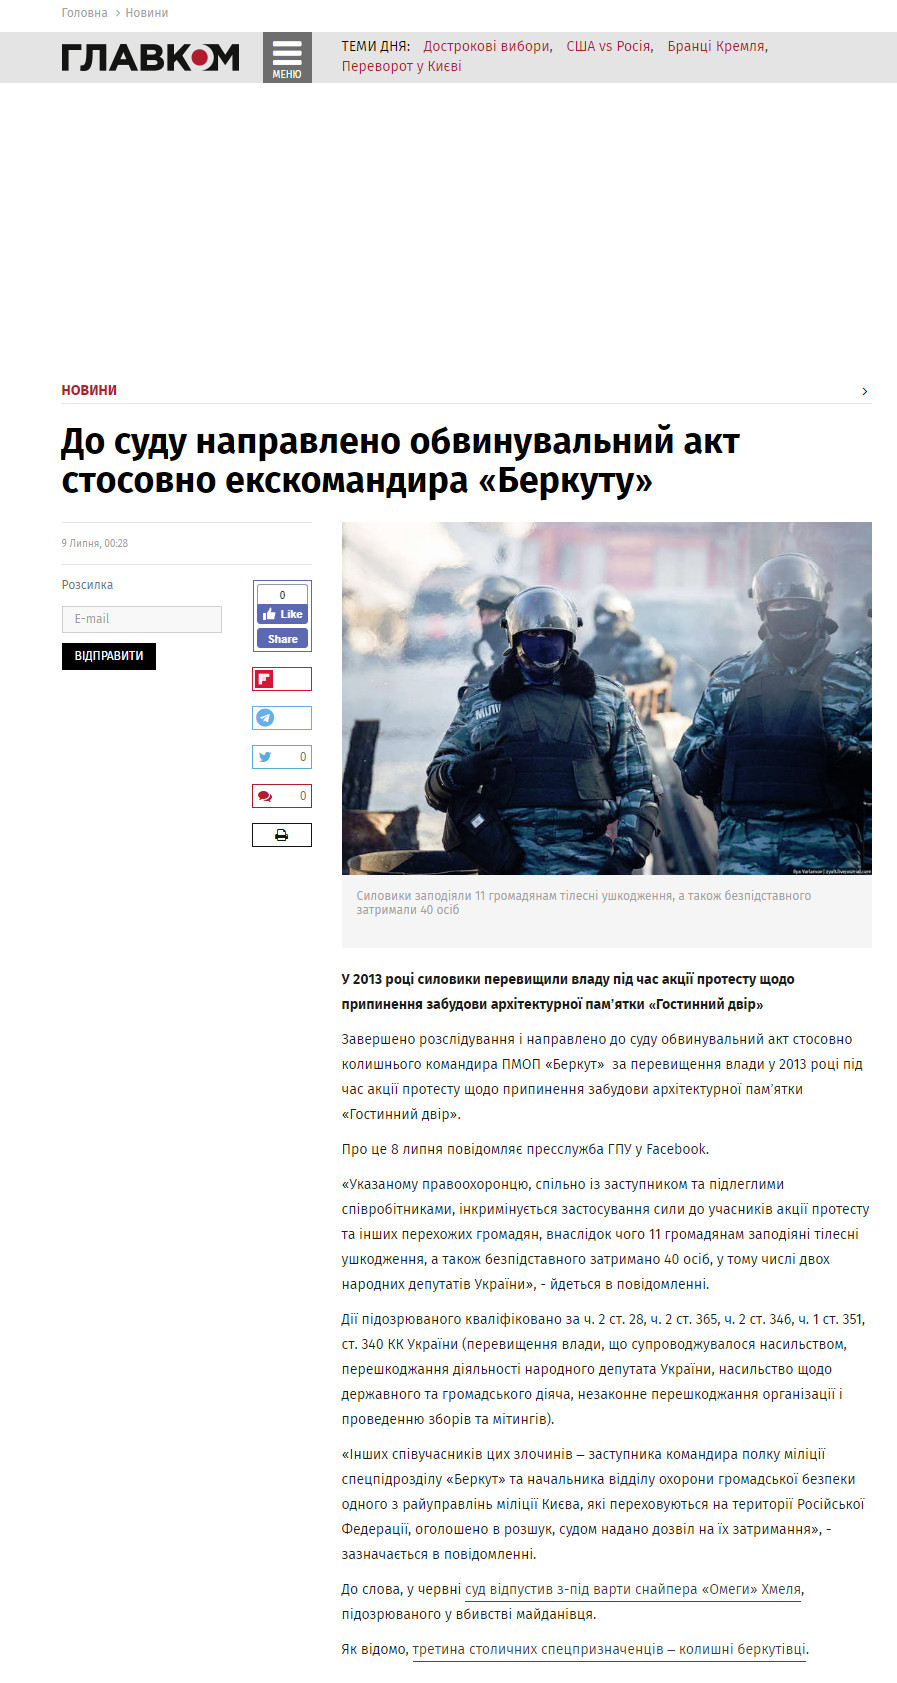 https://glavcom.ua/news/do-sudu-napravleno-obvinuvalniy-akt-stosovno-ekskomandira-berkutu-608236.html